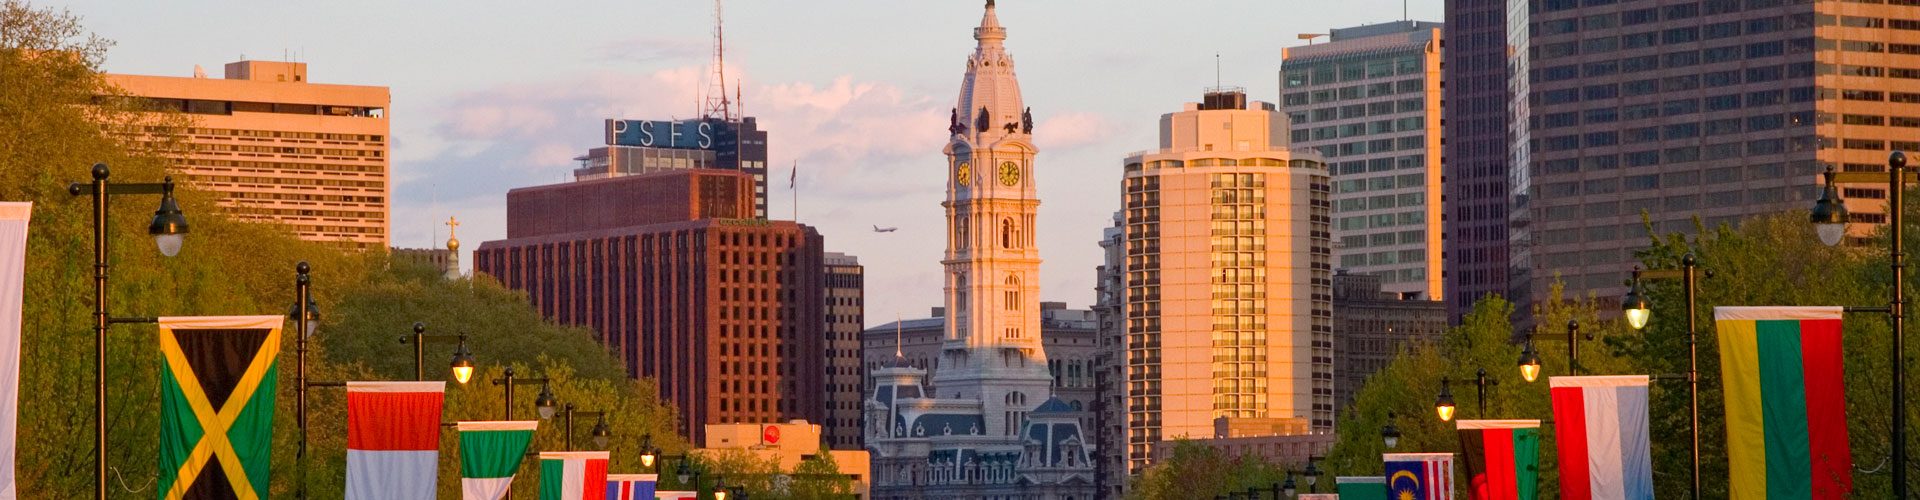 Philadelphia, City Hall, Pennsylvania